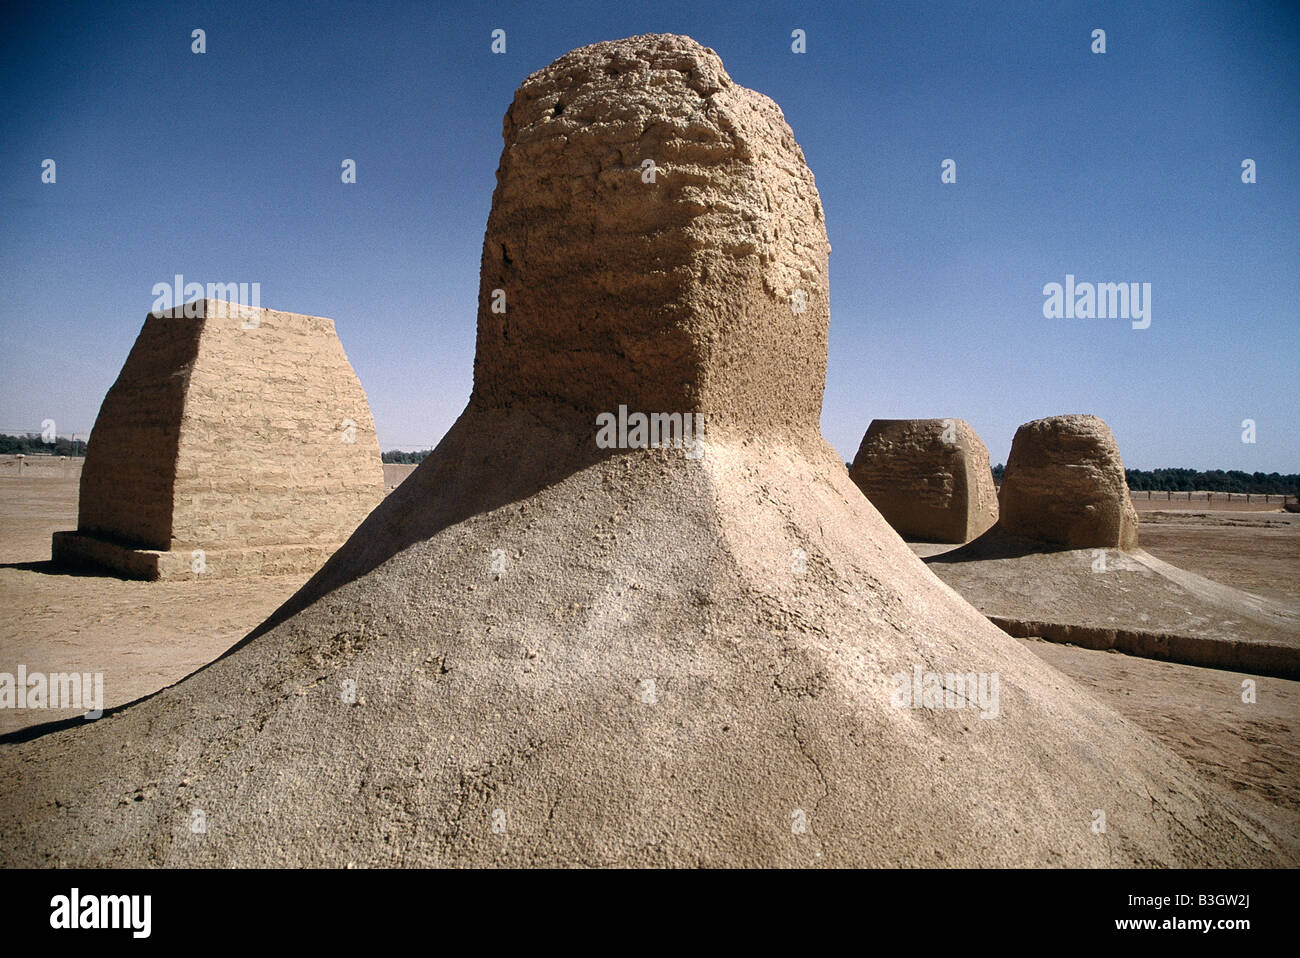 The so-called Hattia Pyramids where important people and rulers of the Garama Kingdom were interred in the Sahara Desert, Libya. Stock Photo